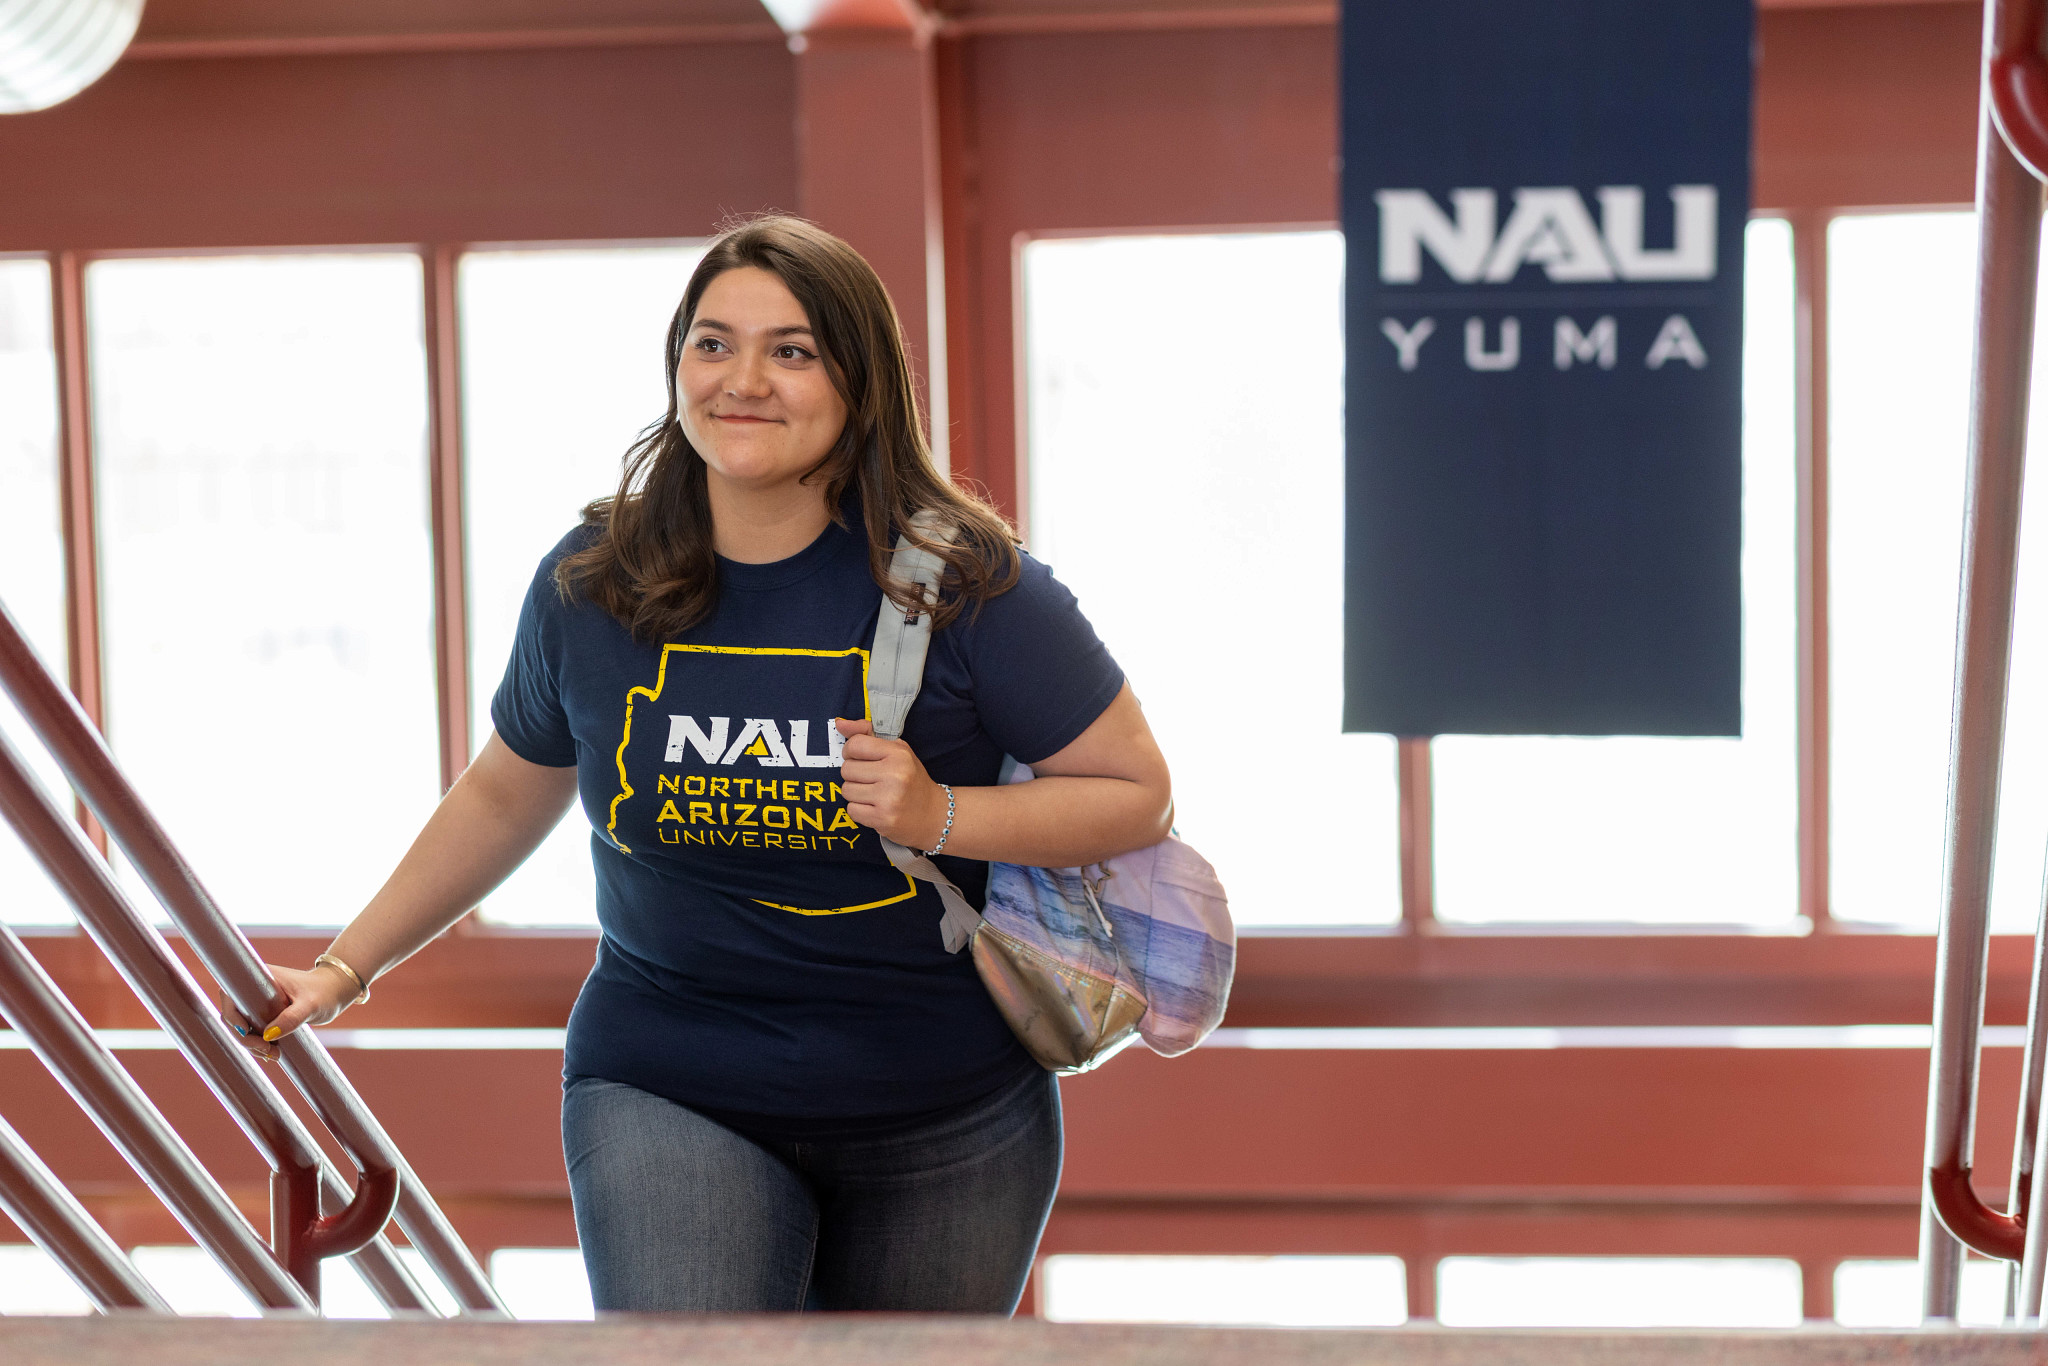 NAU–Yuma student walking up staircase